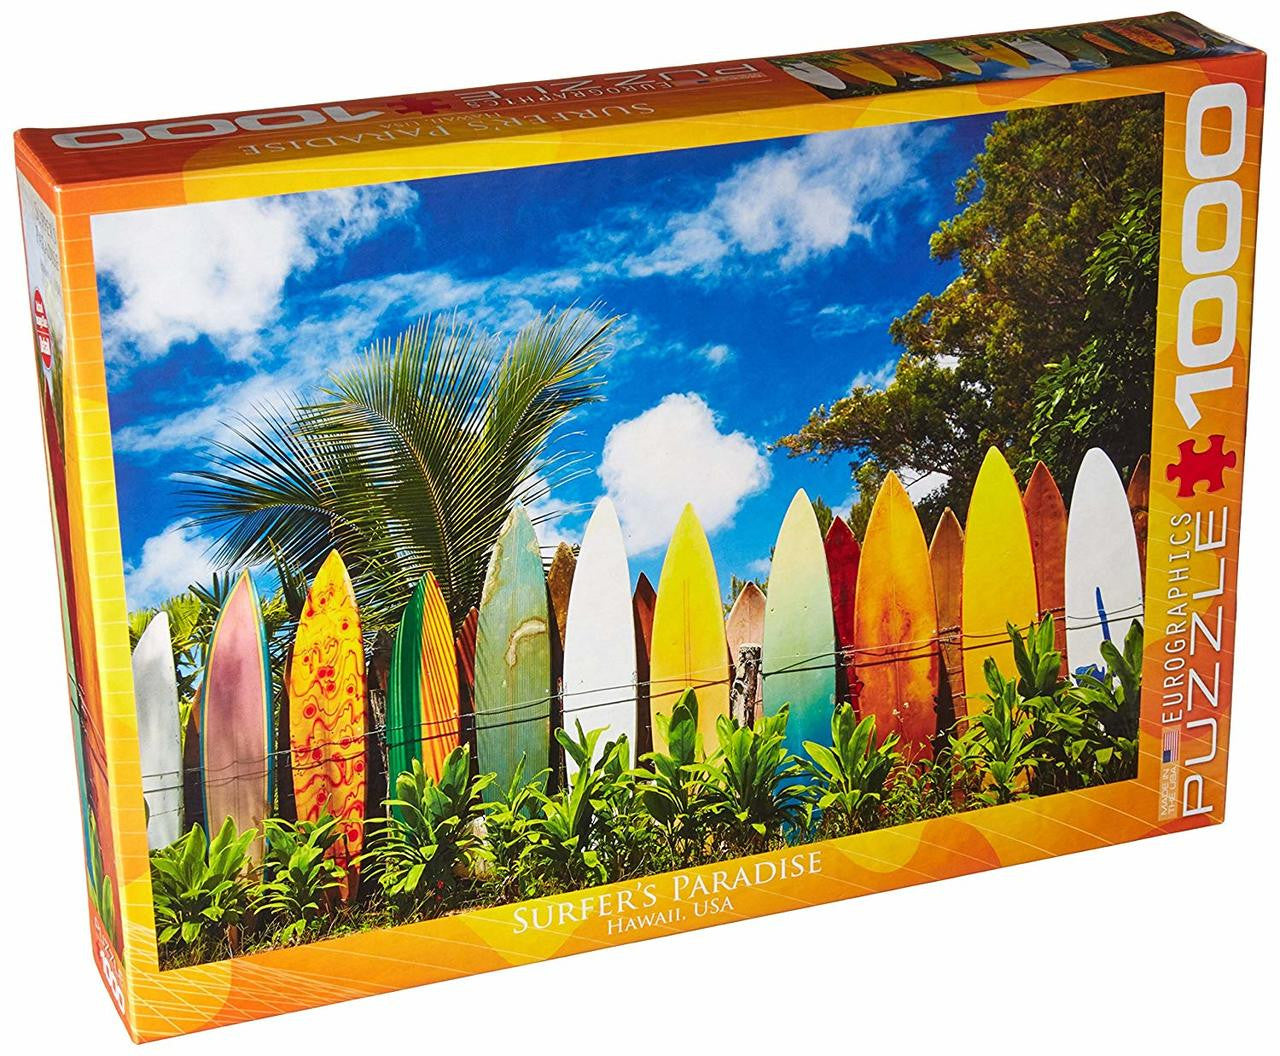 EuroGraphics Surfer's Paradise, Hawaii Jigsaw Puzzle (1000-Piece)